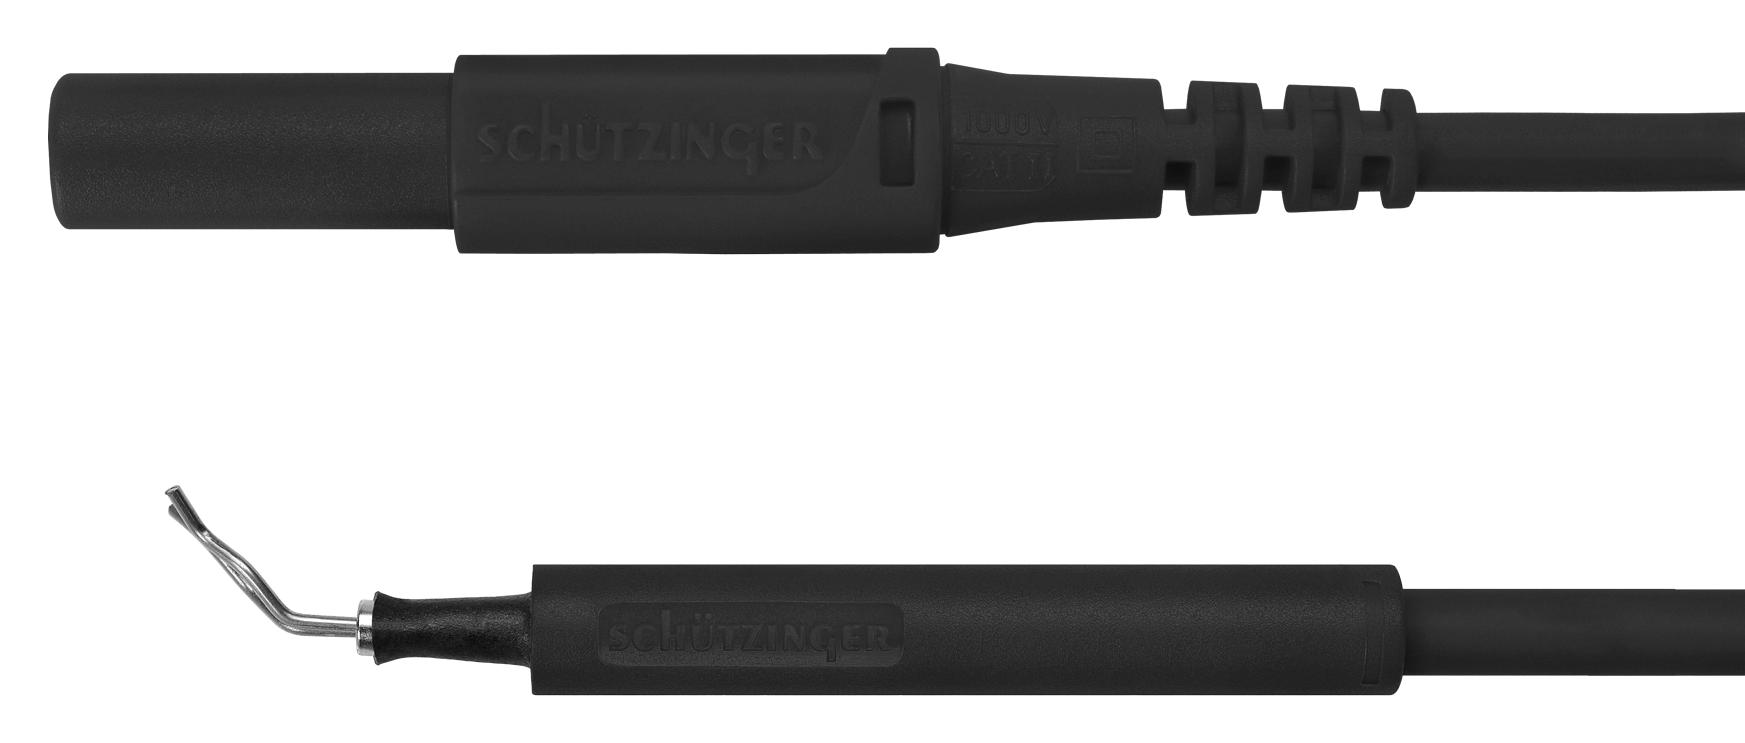 Schutzinger Al 8322 / Zpk / 1 / 100 / Sw Test Lead, 4mm Banana Jack-Test Clip, 1M